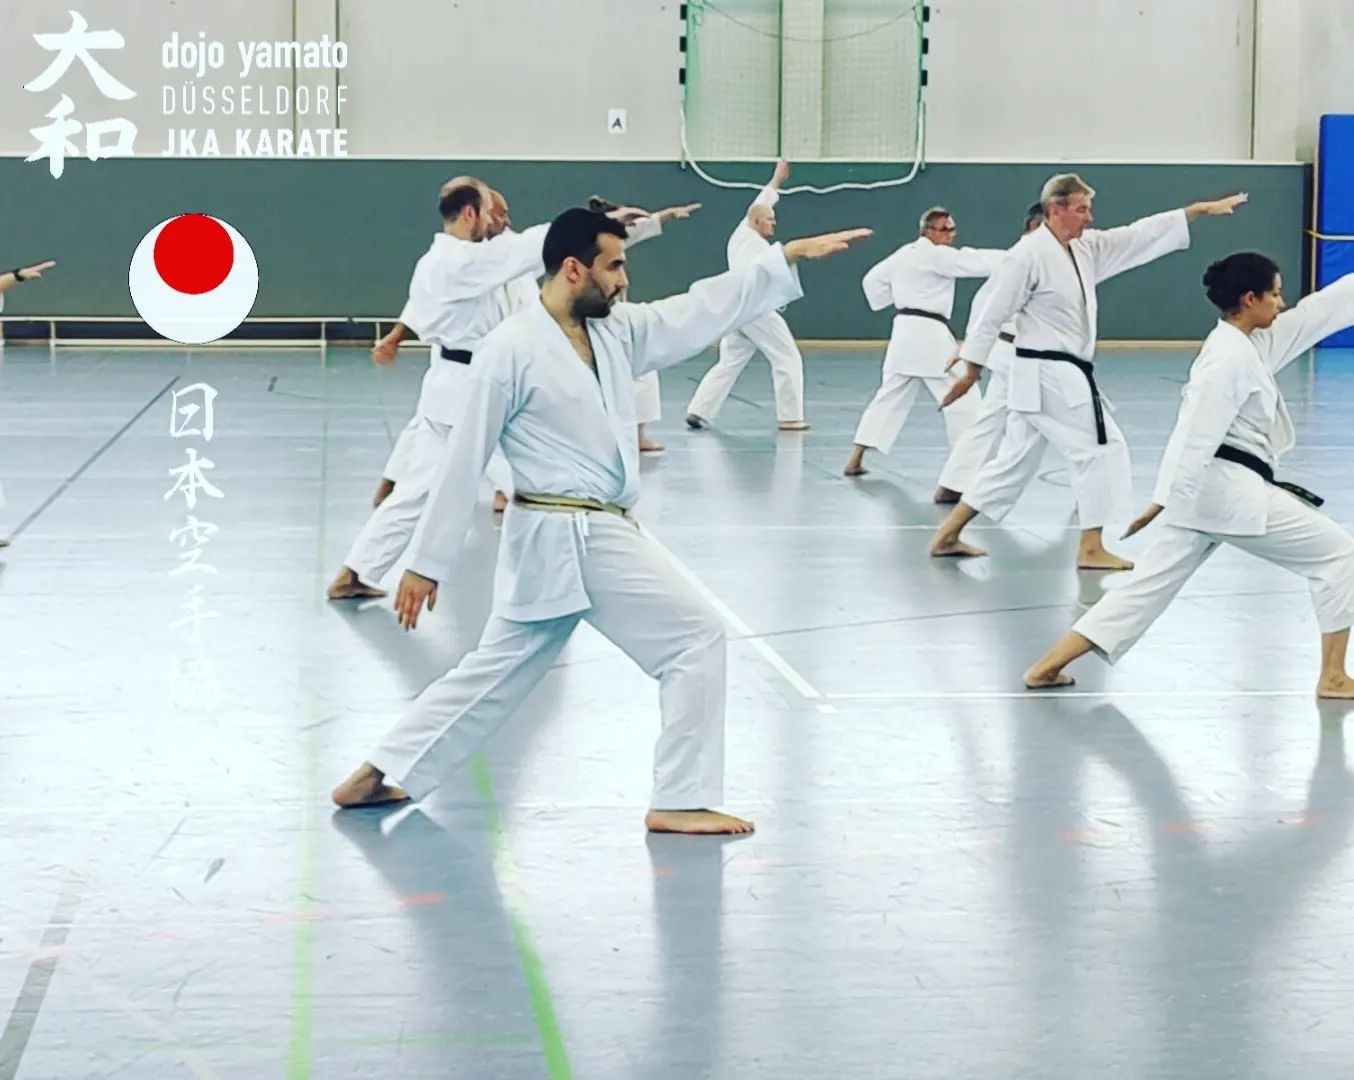 Training im Dojo Yamato Düsseldorf e.V.🥋
.
.
.
.
.
.
.
#karate #training #fun #jka #djkb #kihon #kata #kumite #düsseldorf #duesseldorf #japan #sport #sportmotivation #shotokan #traditional #nrw #yamatoduesseldorf #fitness #fitnessmotivation #jkaKarate #jkakaratedo #neuss #ratingen #hilden #leverkusen #kaarst #selbstbstbewusstsein #selbstvertrauen